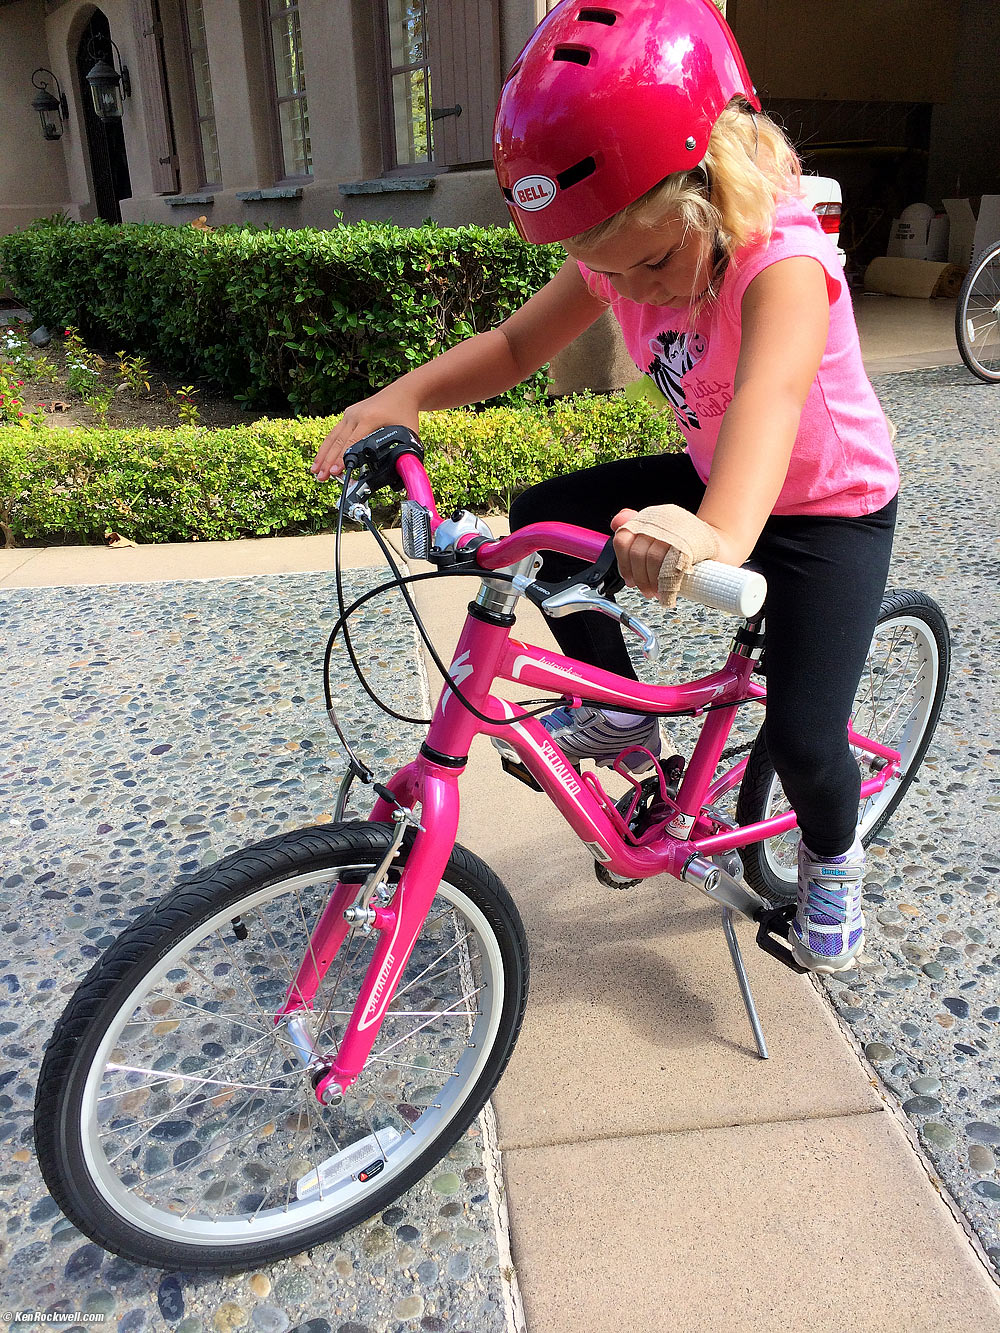 Katie tries the no-training-wheels bike